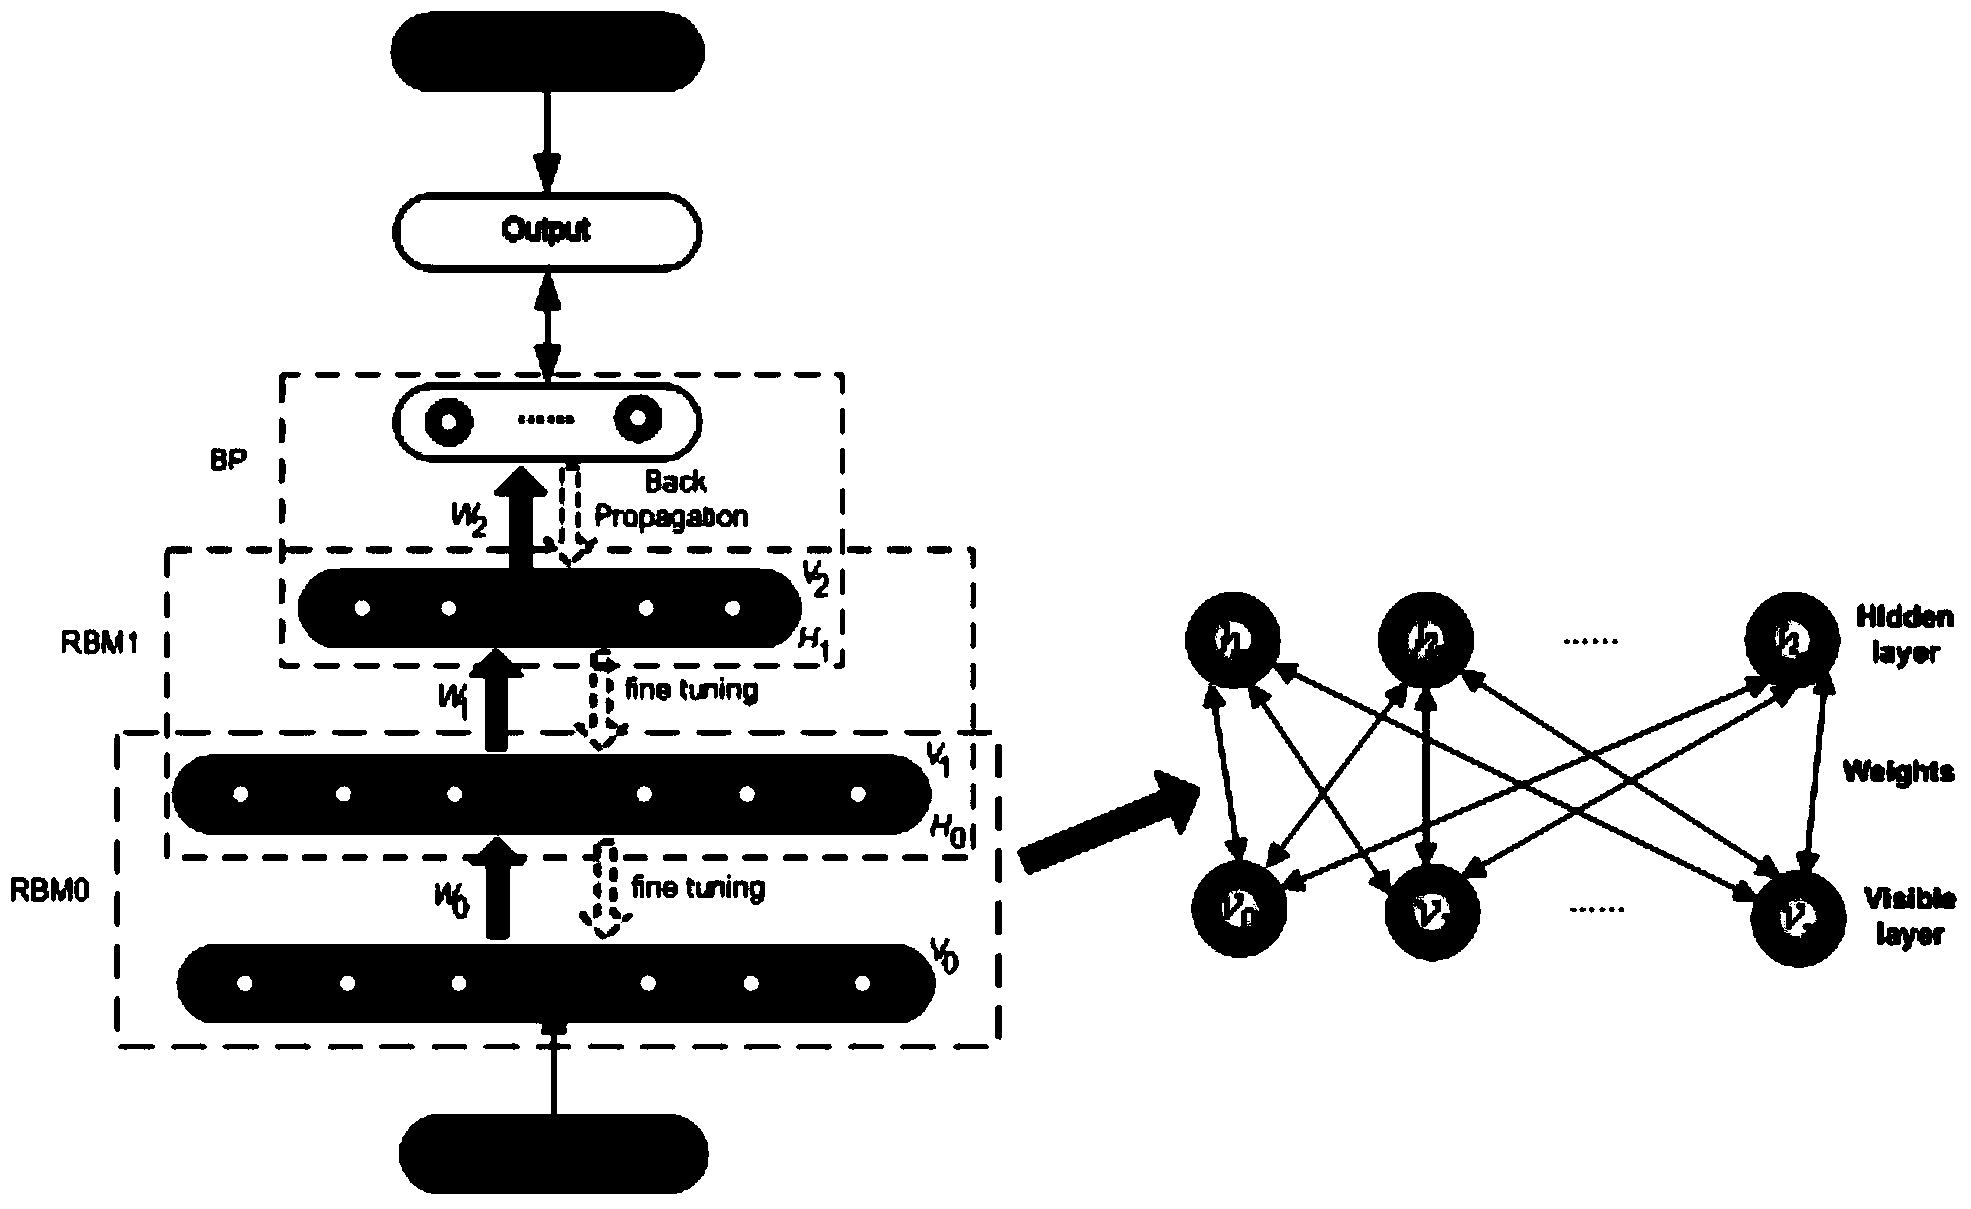 Deep belief network image recognition method based on Bayesian regularization